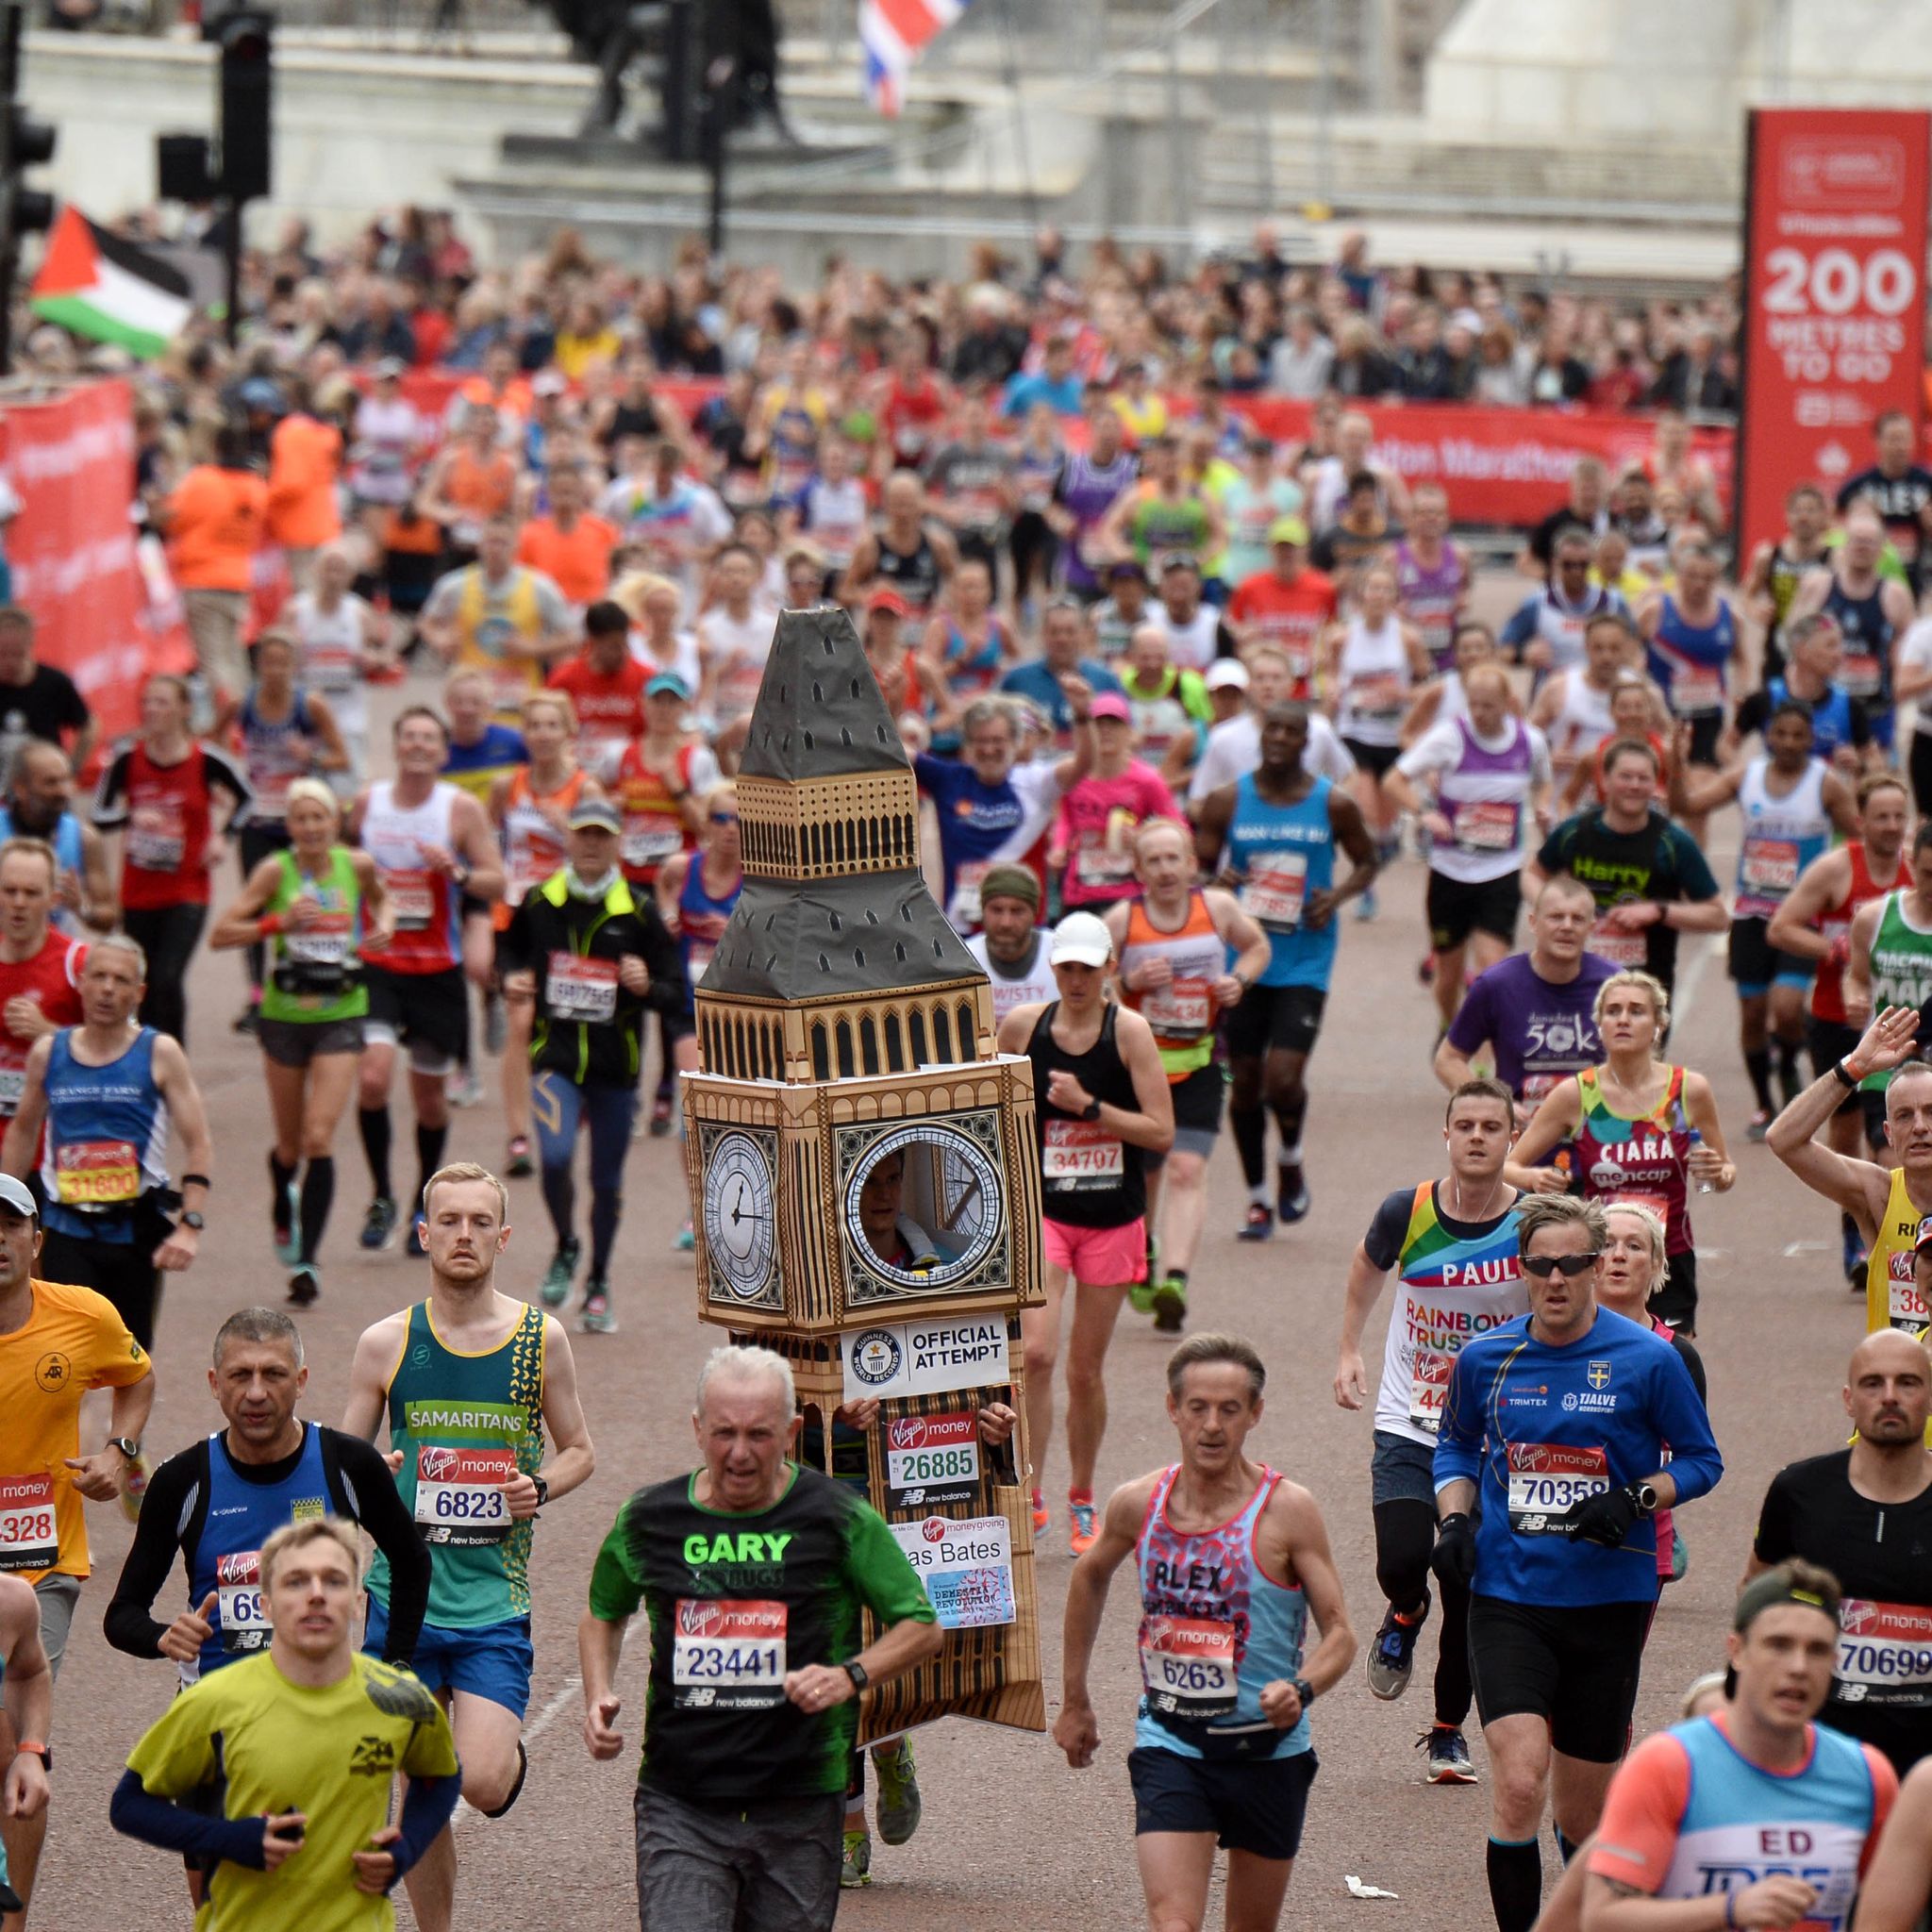 what is the average marathon finish time?